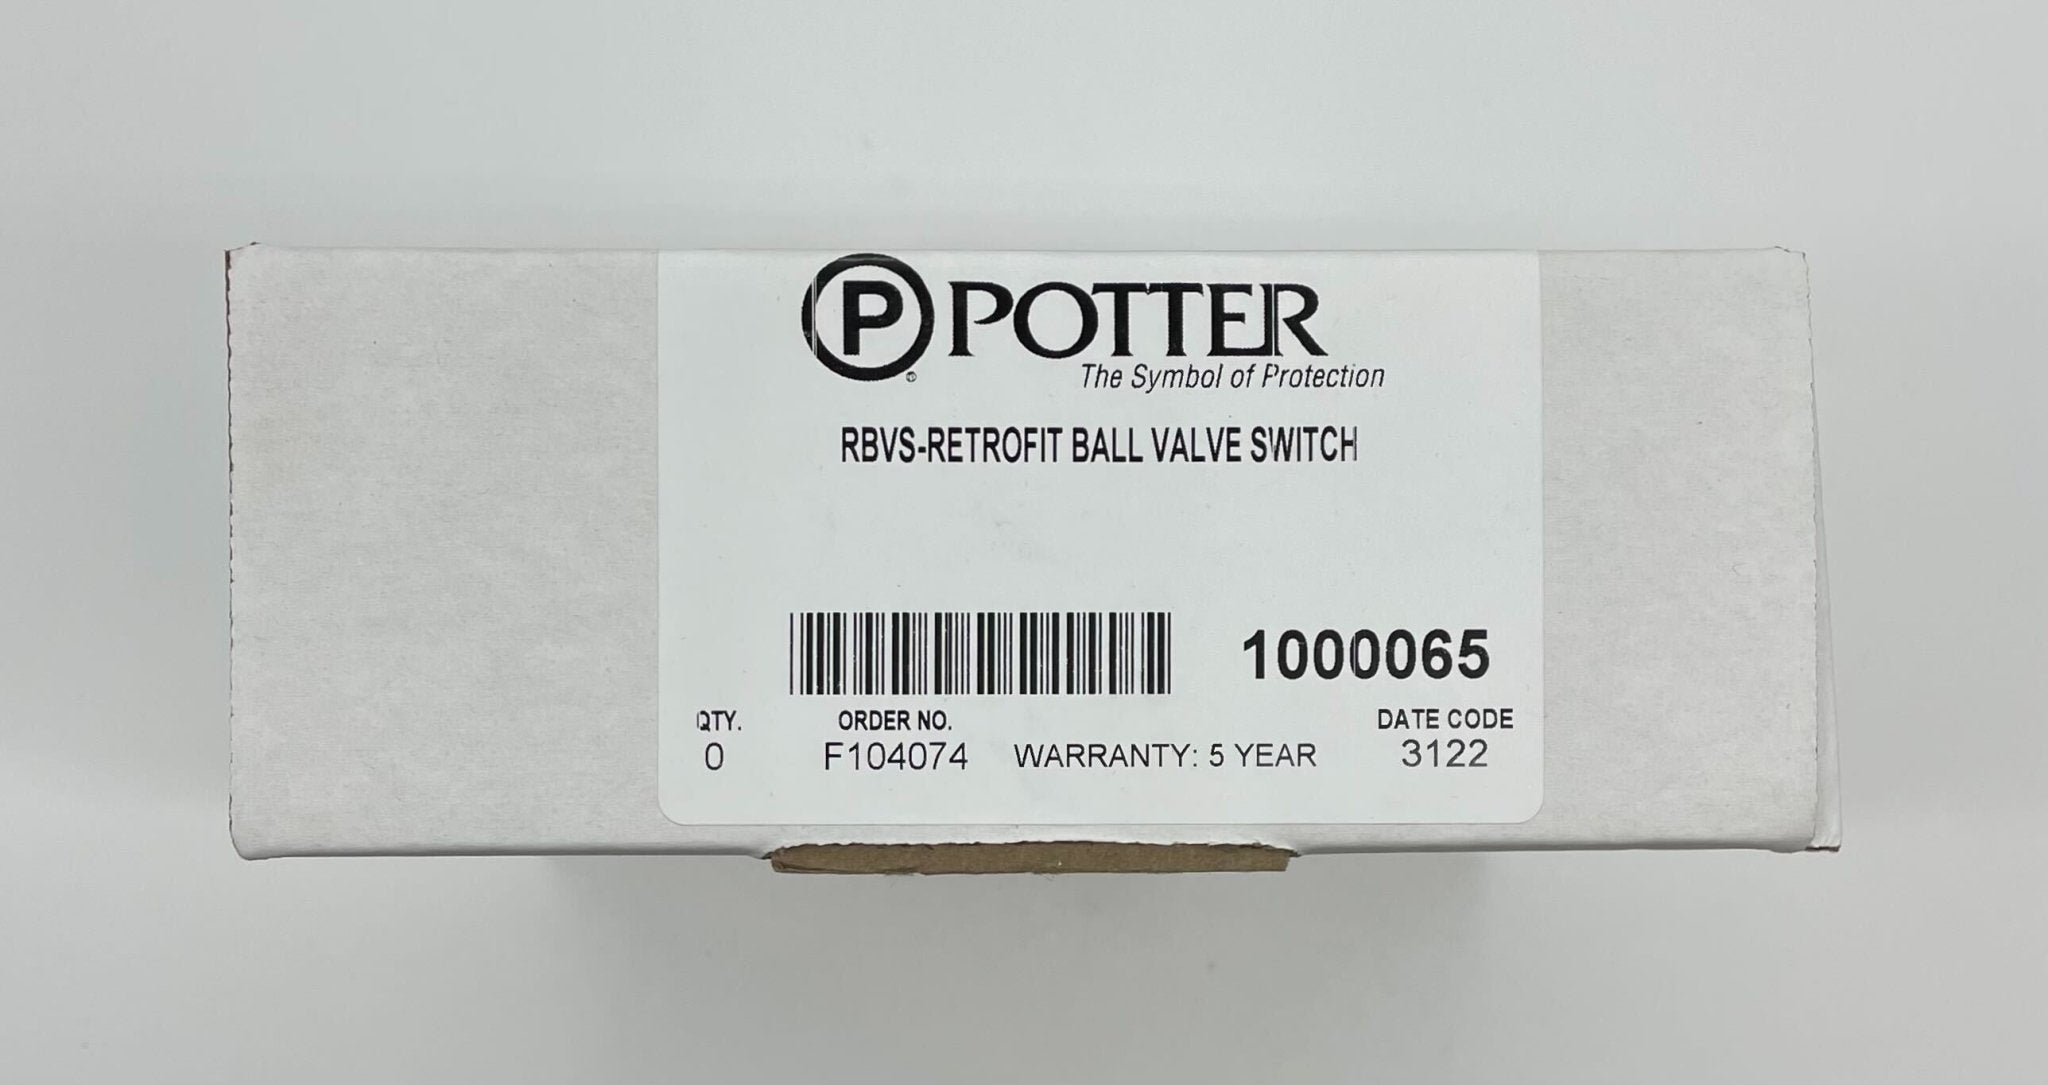 Potter RBVS - The Fire Alarm Supplier